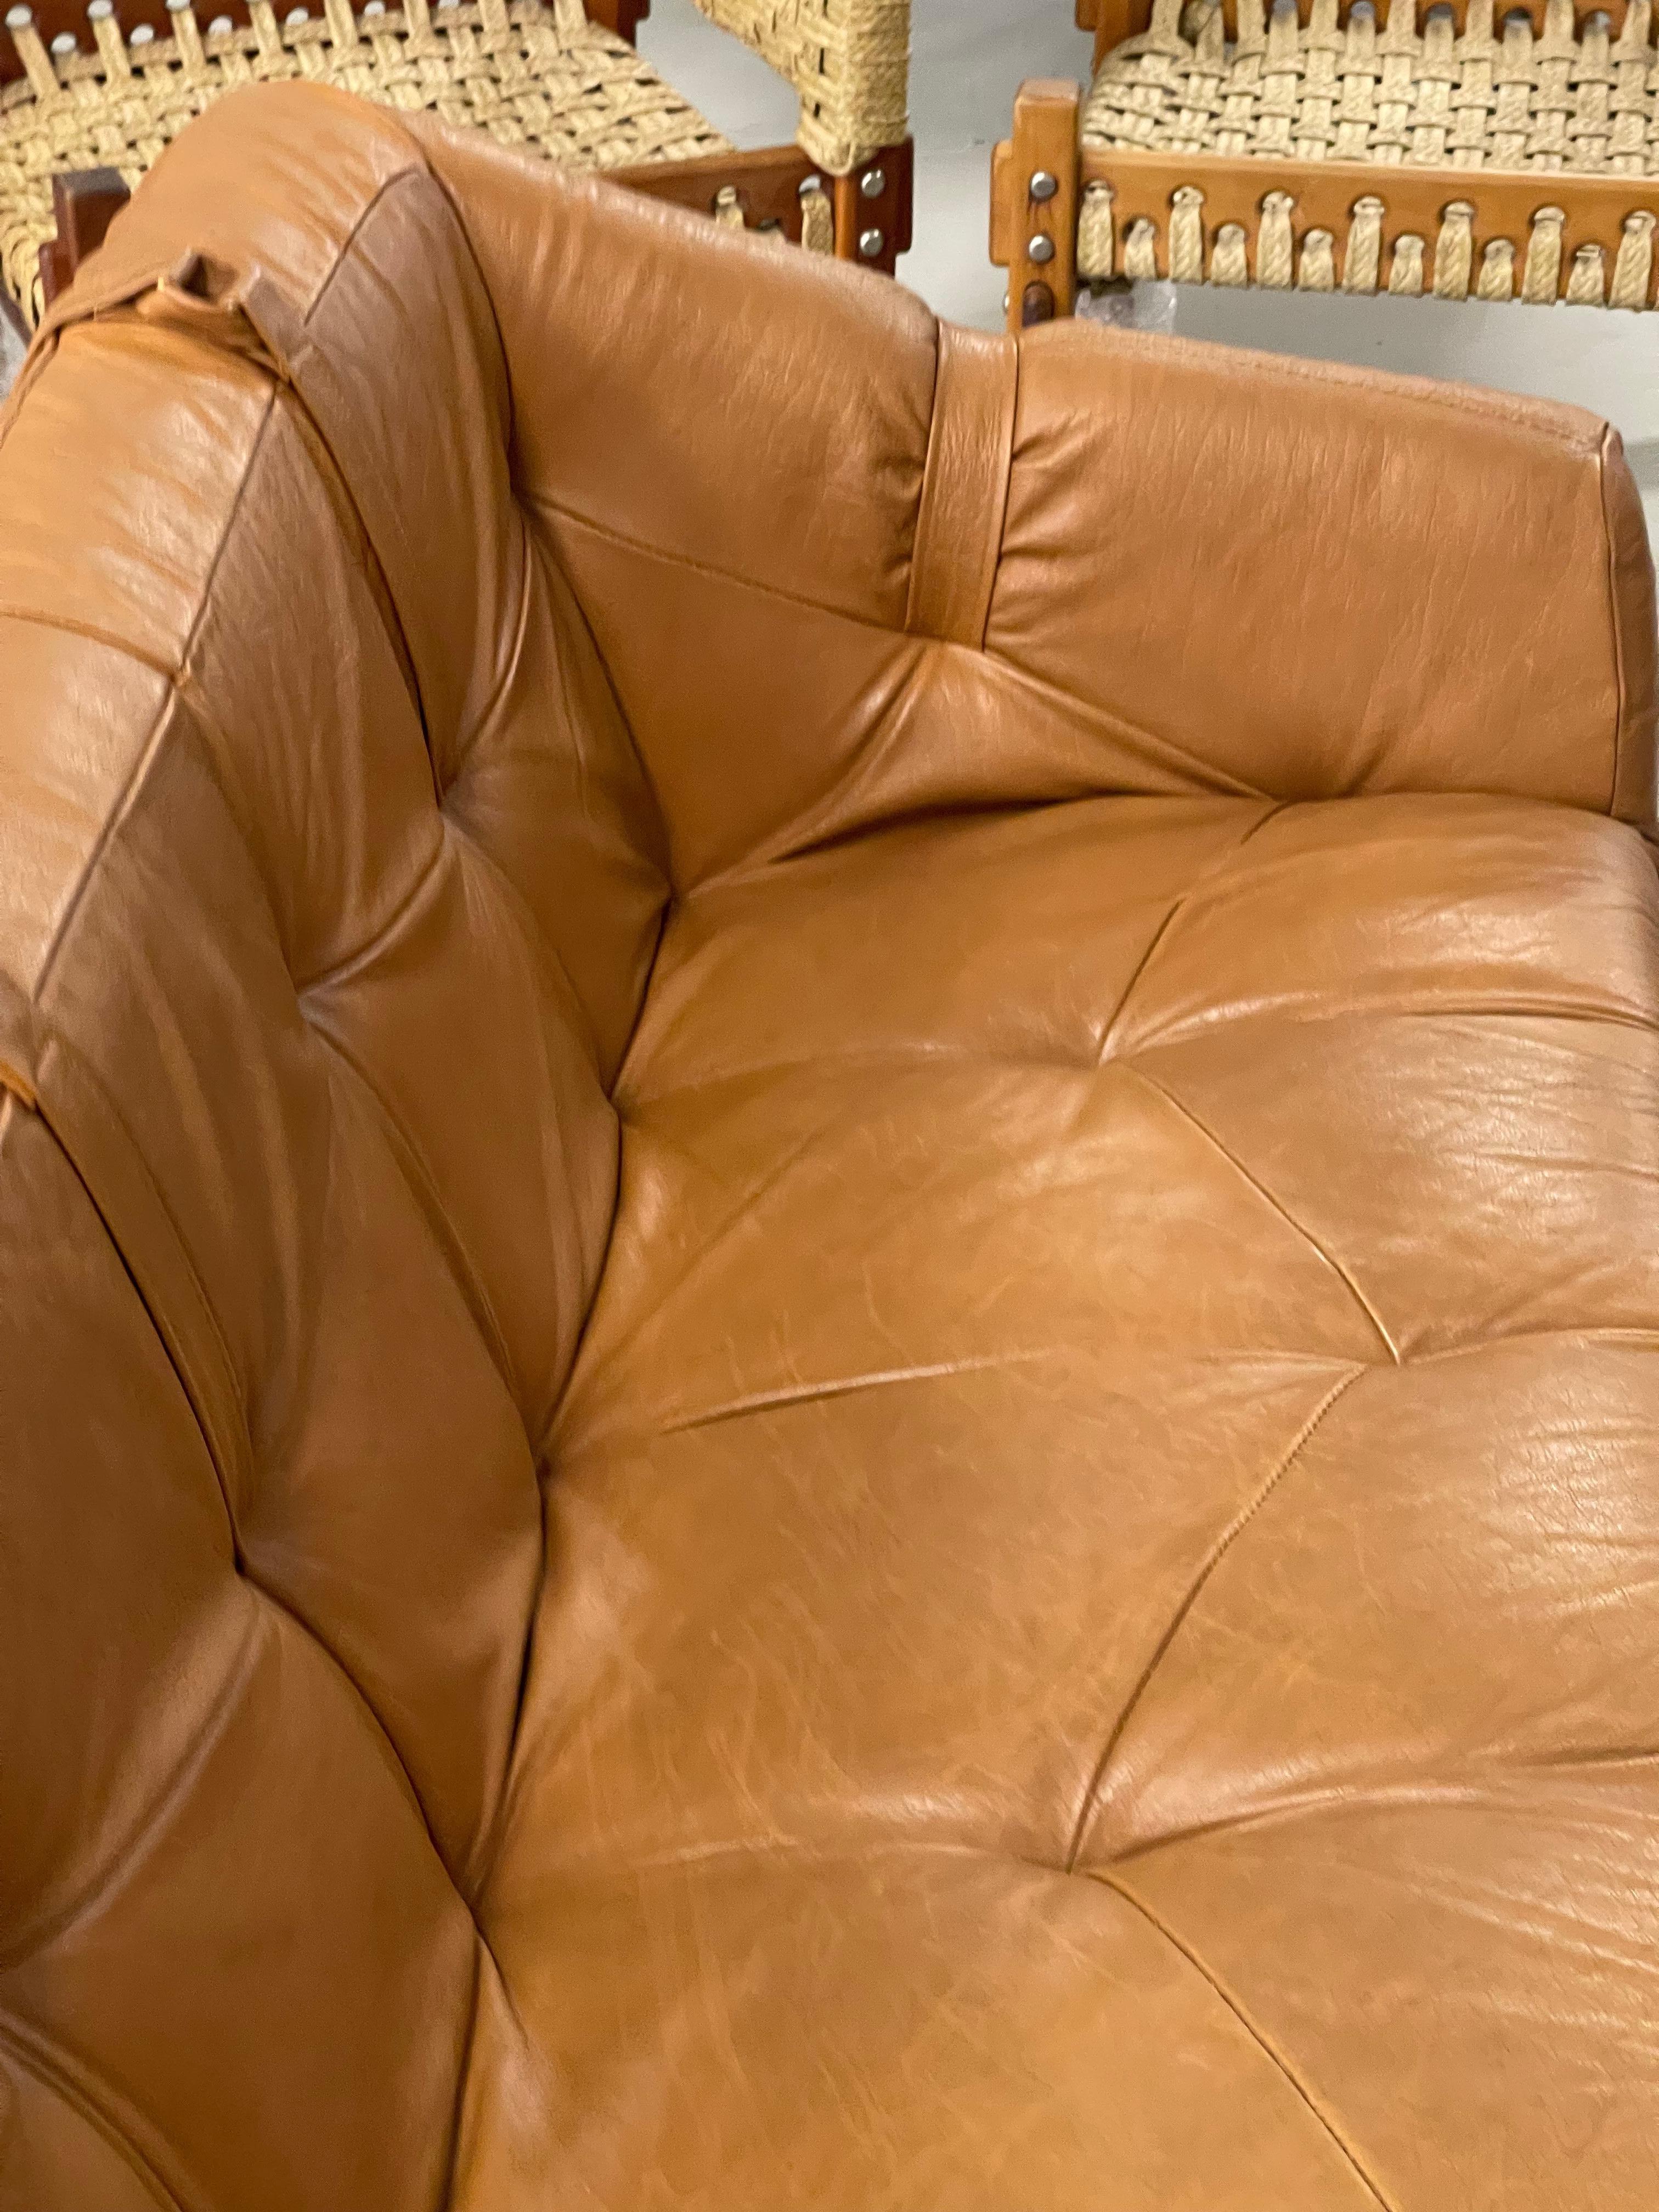 Percival Lafer Brazilian Rosewood Leather Sofa 4